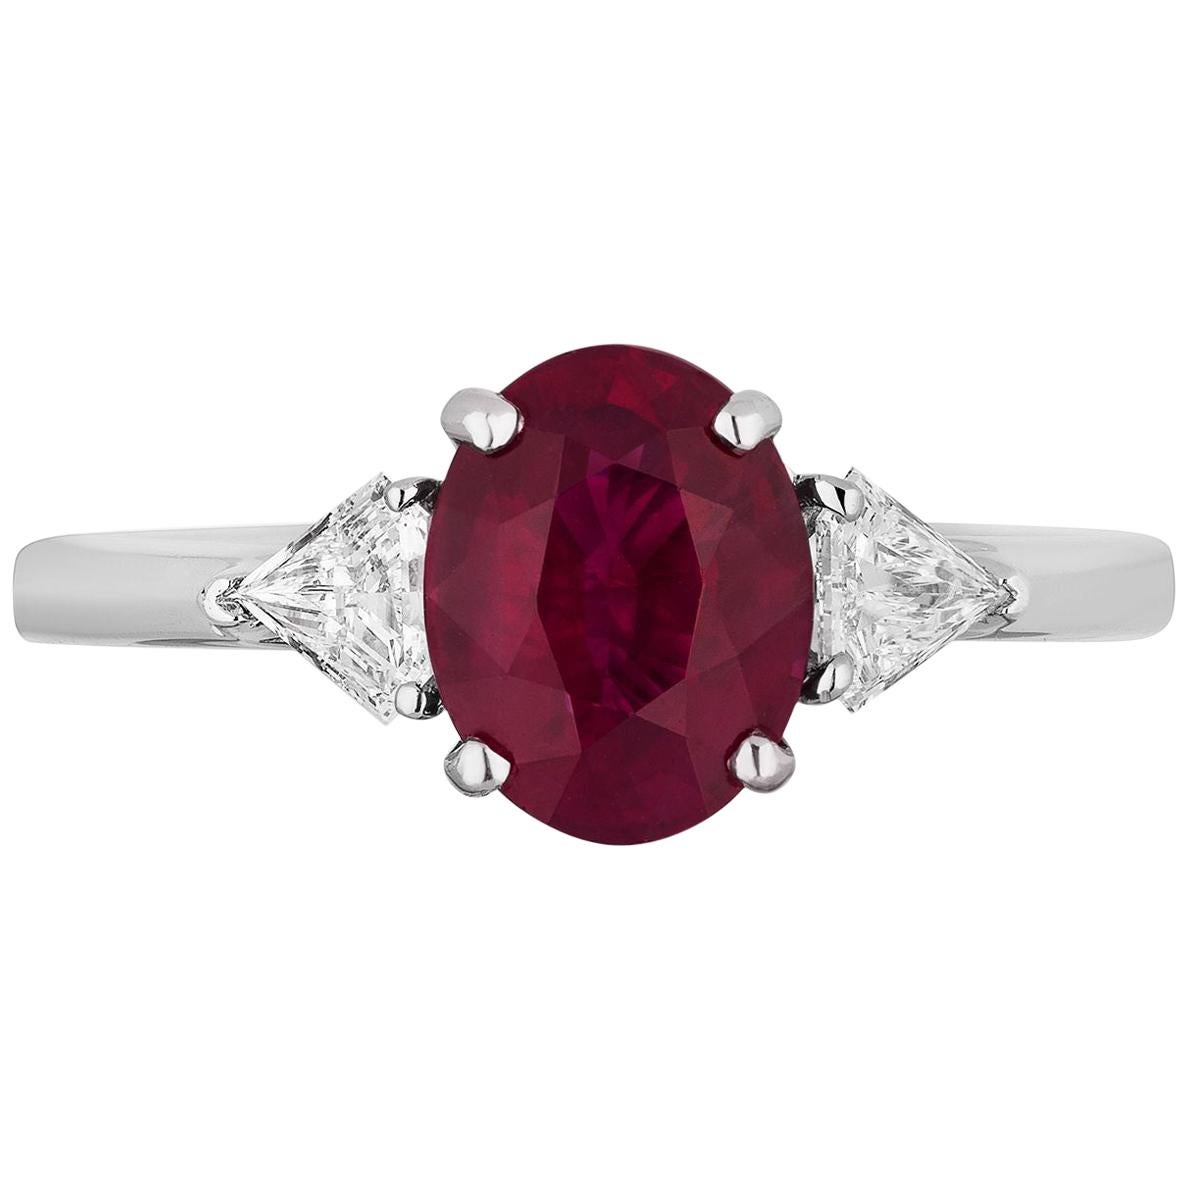 AGL Certified 2.34 Carat Burma Ruby Diamond Three-Stone Ring